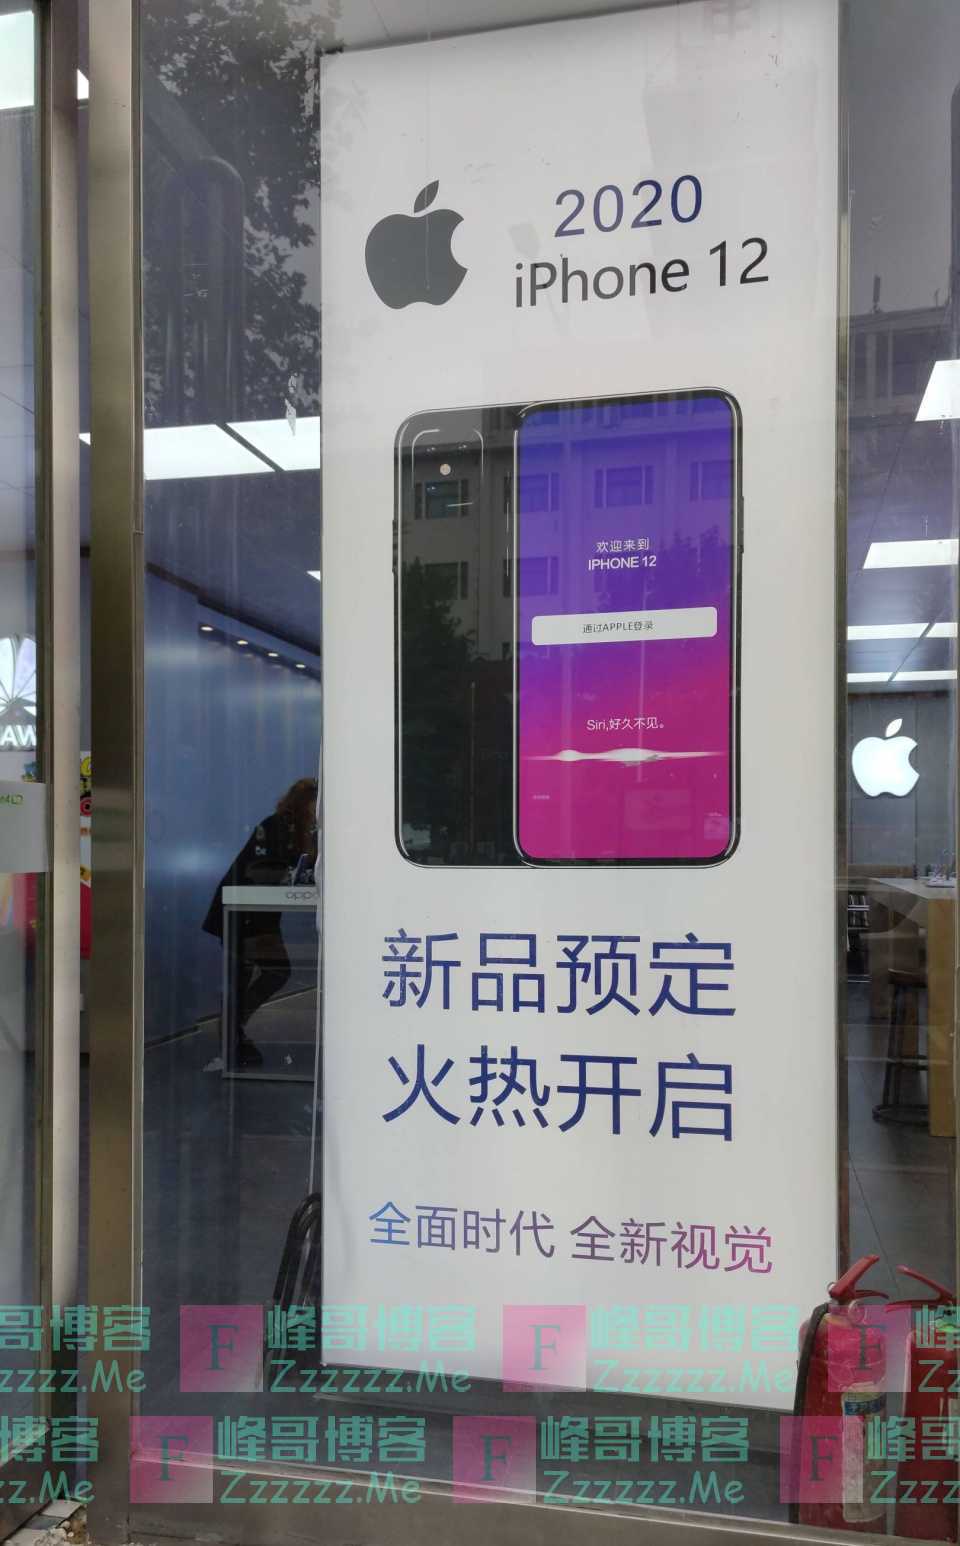 iPhone12还未发布，商家已经摆出宣传海报，祖传刘海都没了